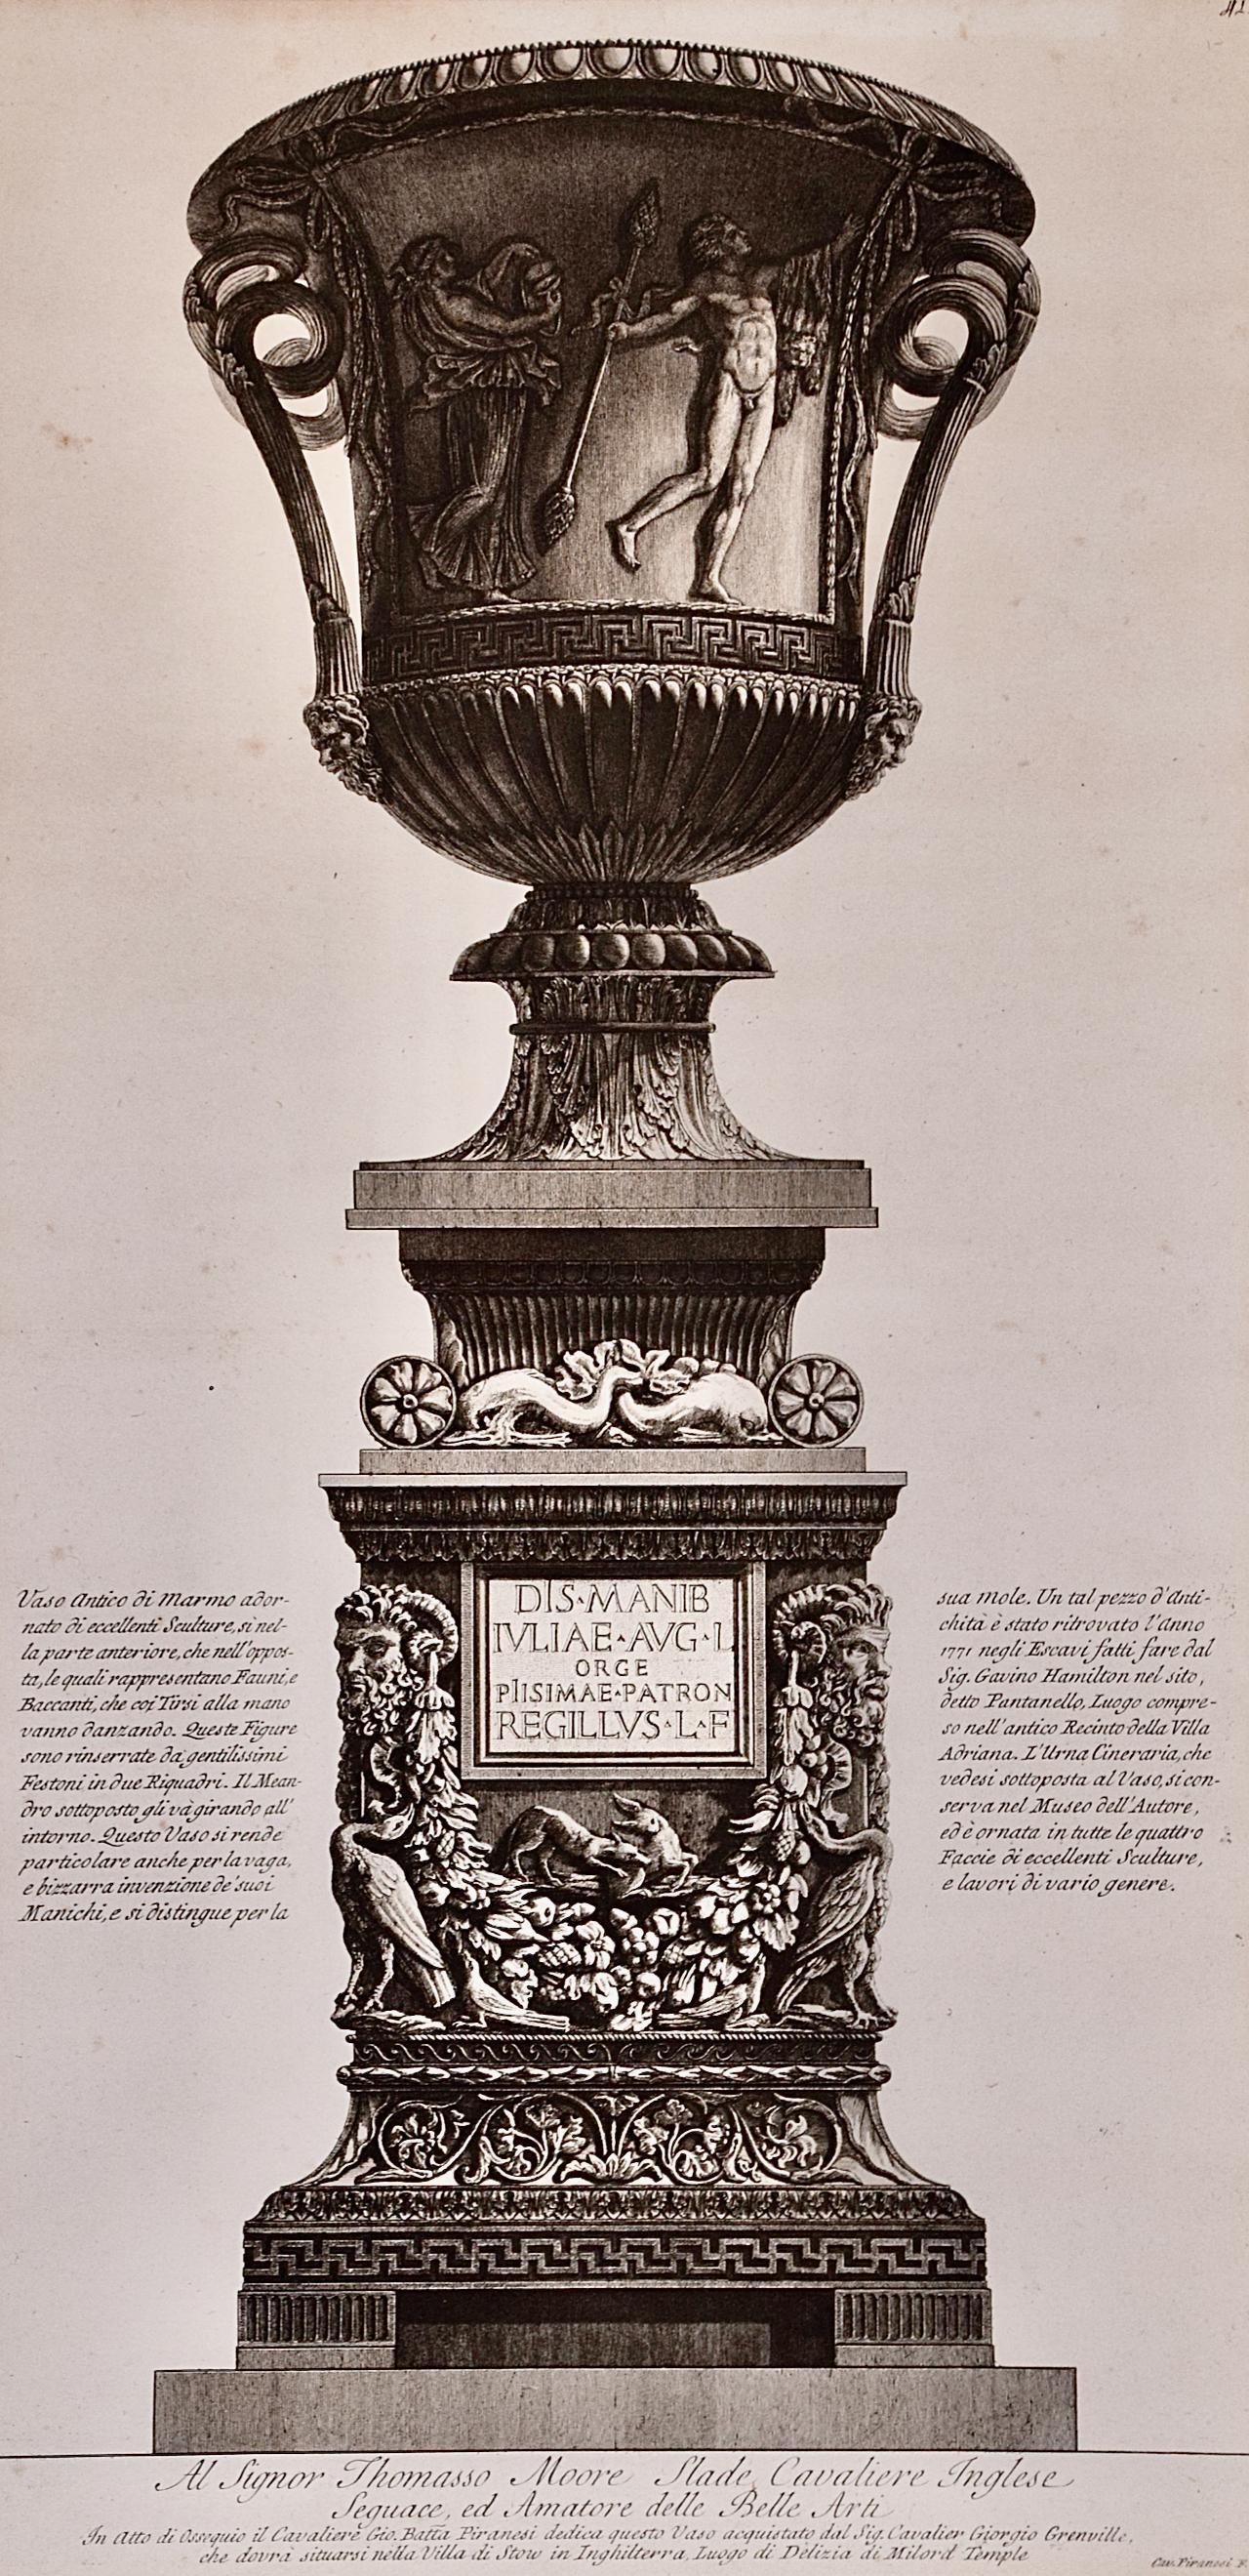 A Framed 18th C. Piranesi Etching of an Ancient Marble Vase from Hadrian's Villa - Print by Giovanni Battista Piranesi